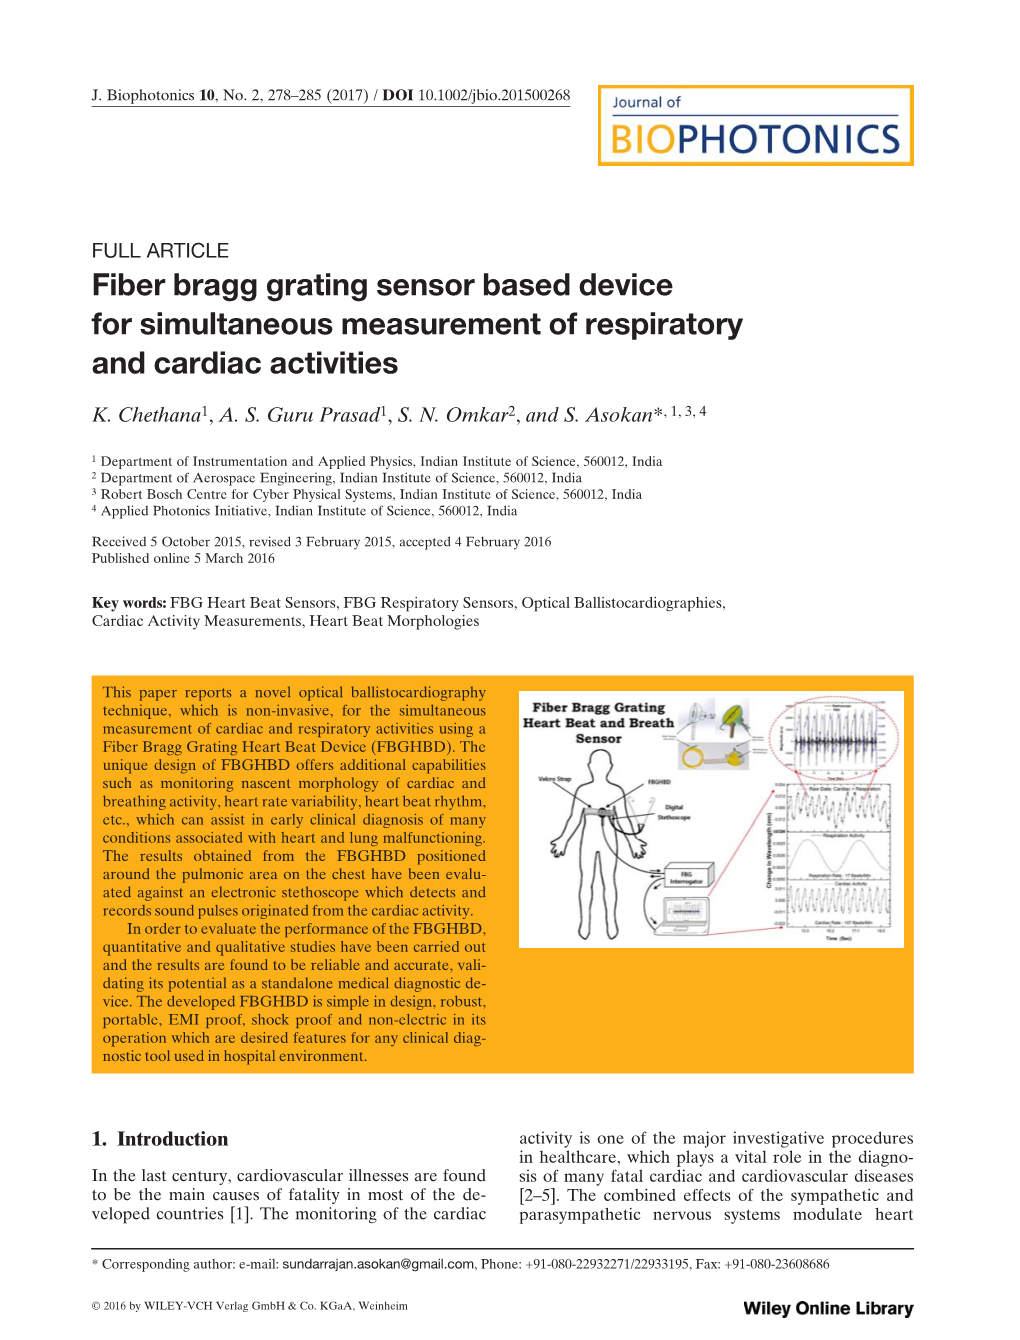 Fiber Bragg Grating Sensor Based Device for Simultaneous Measurement of Respiratory and Cardiac Activities